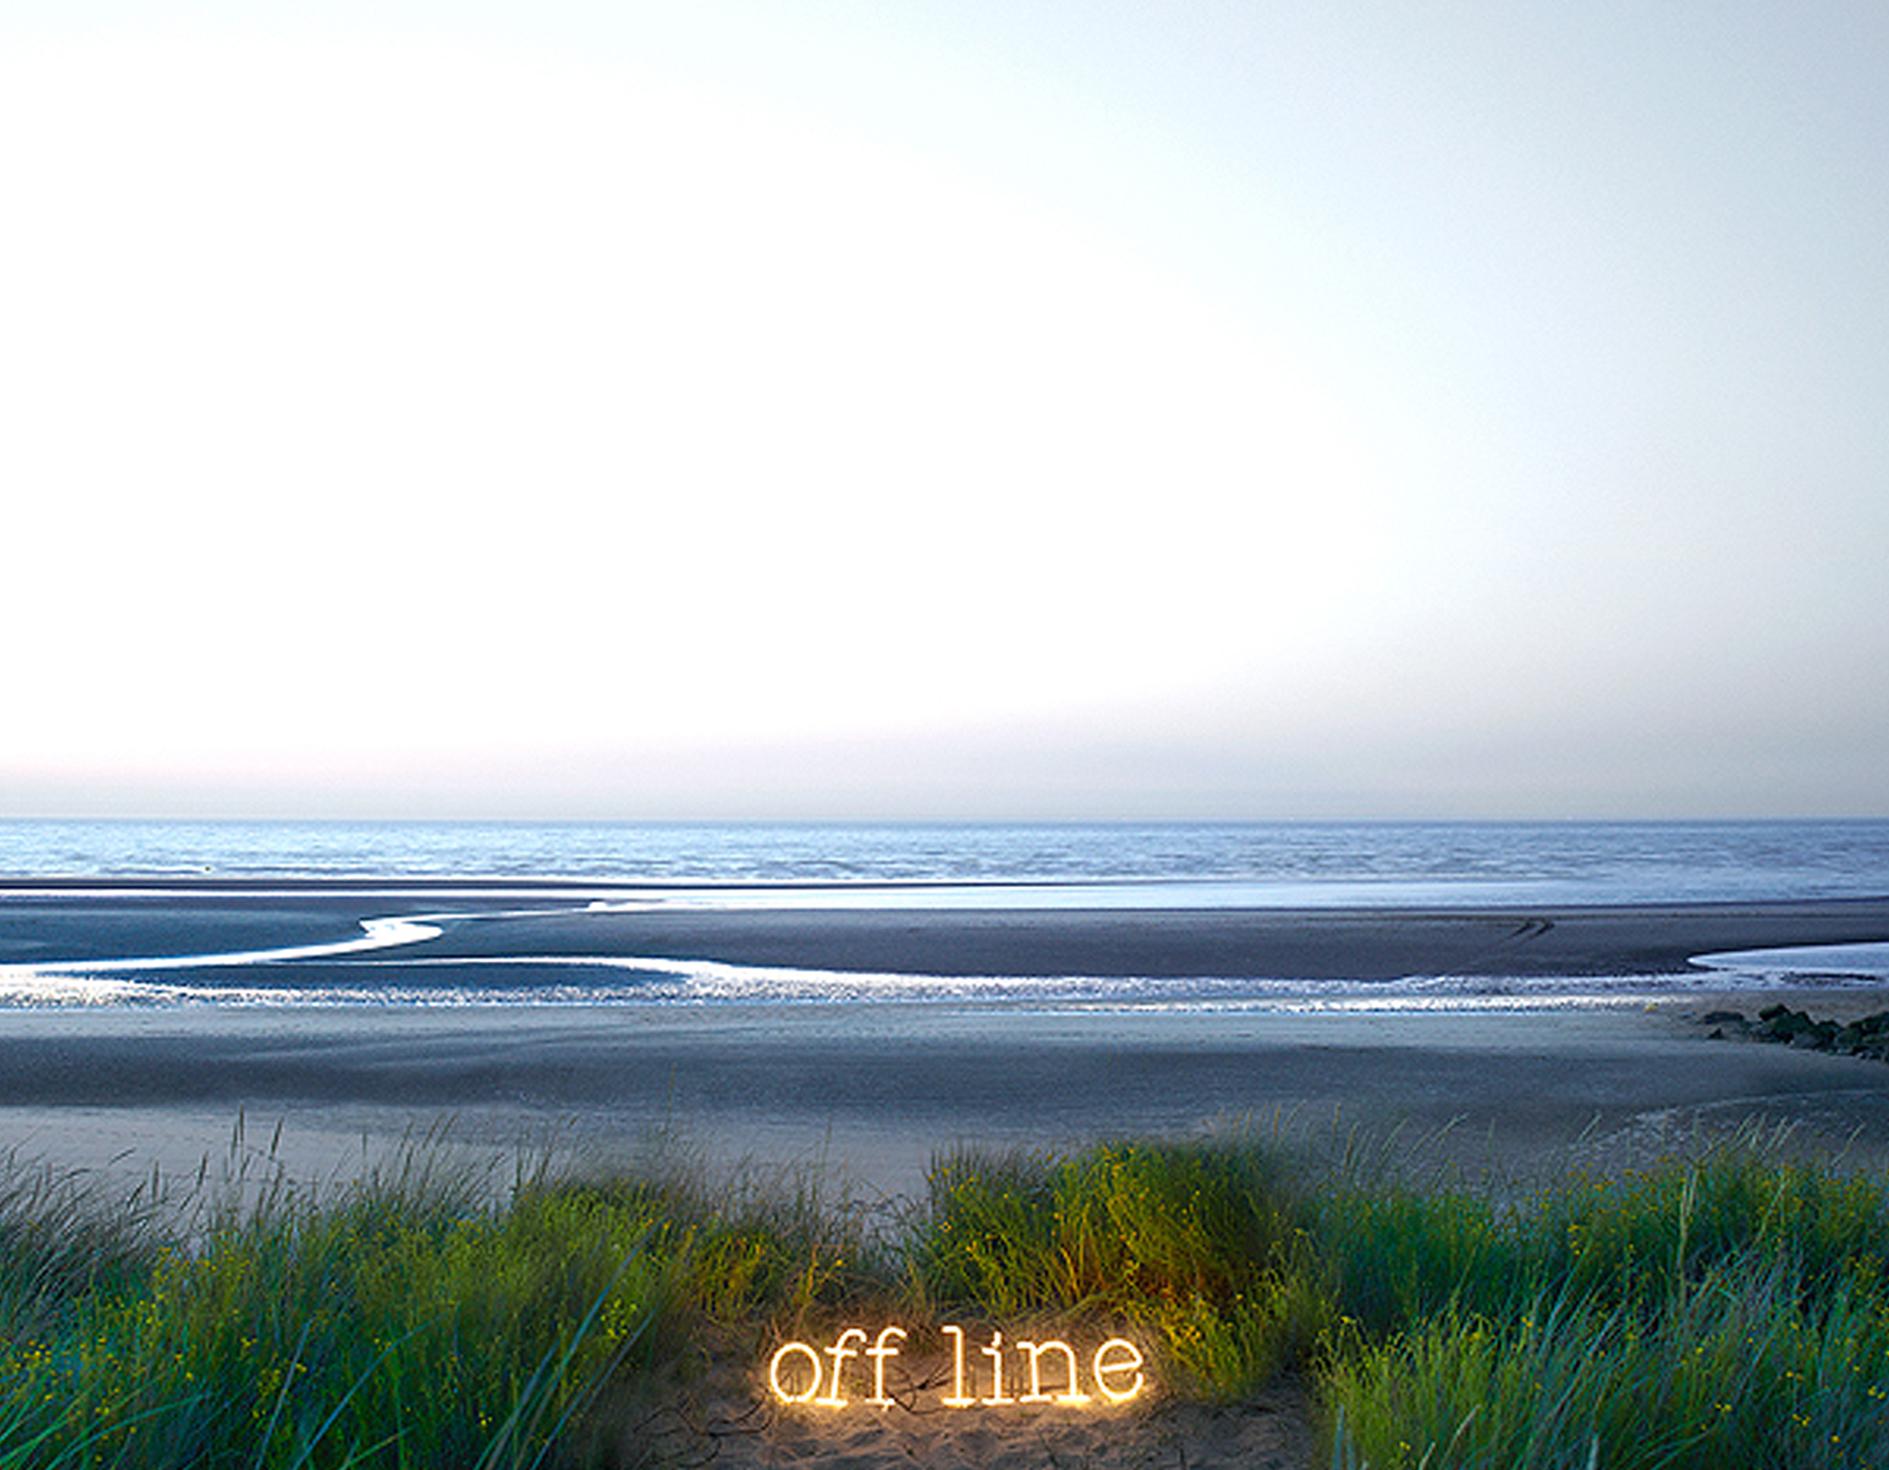 Offline, The Dream Art Project - Photograph by Anne Valverde